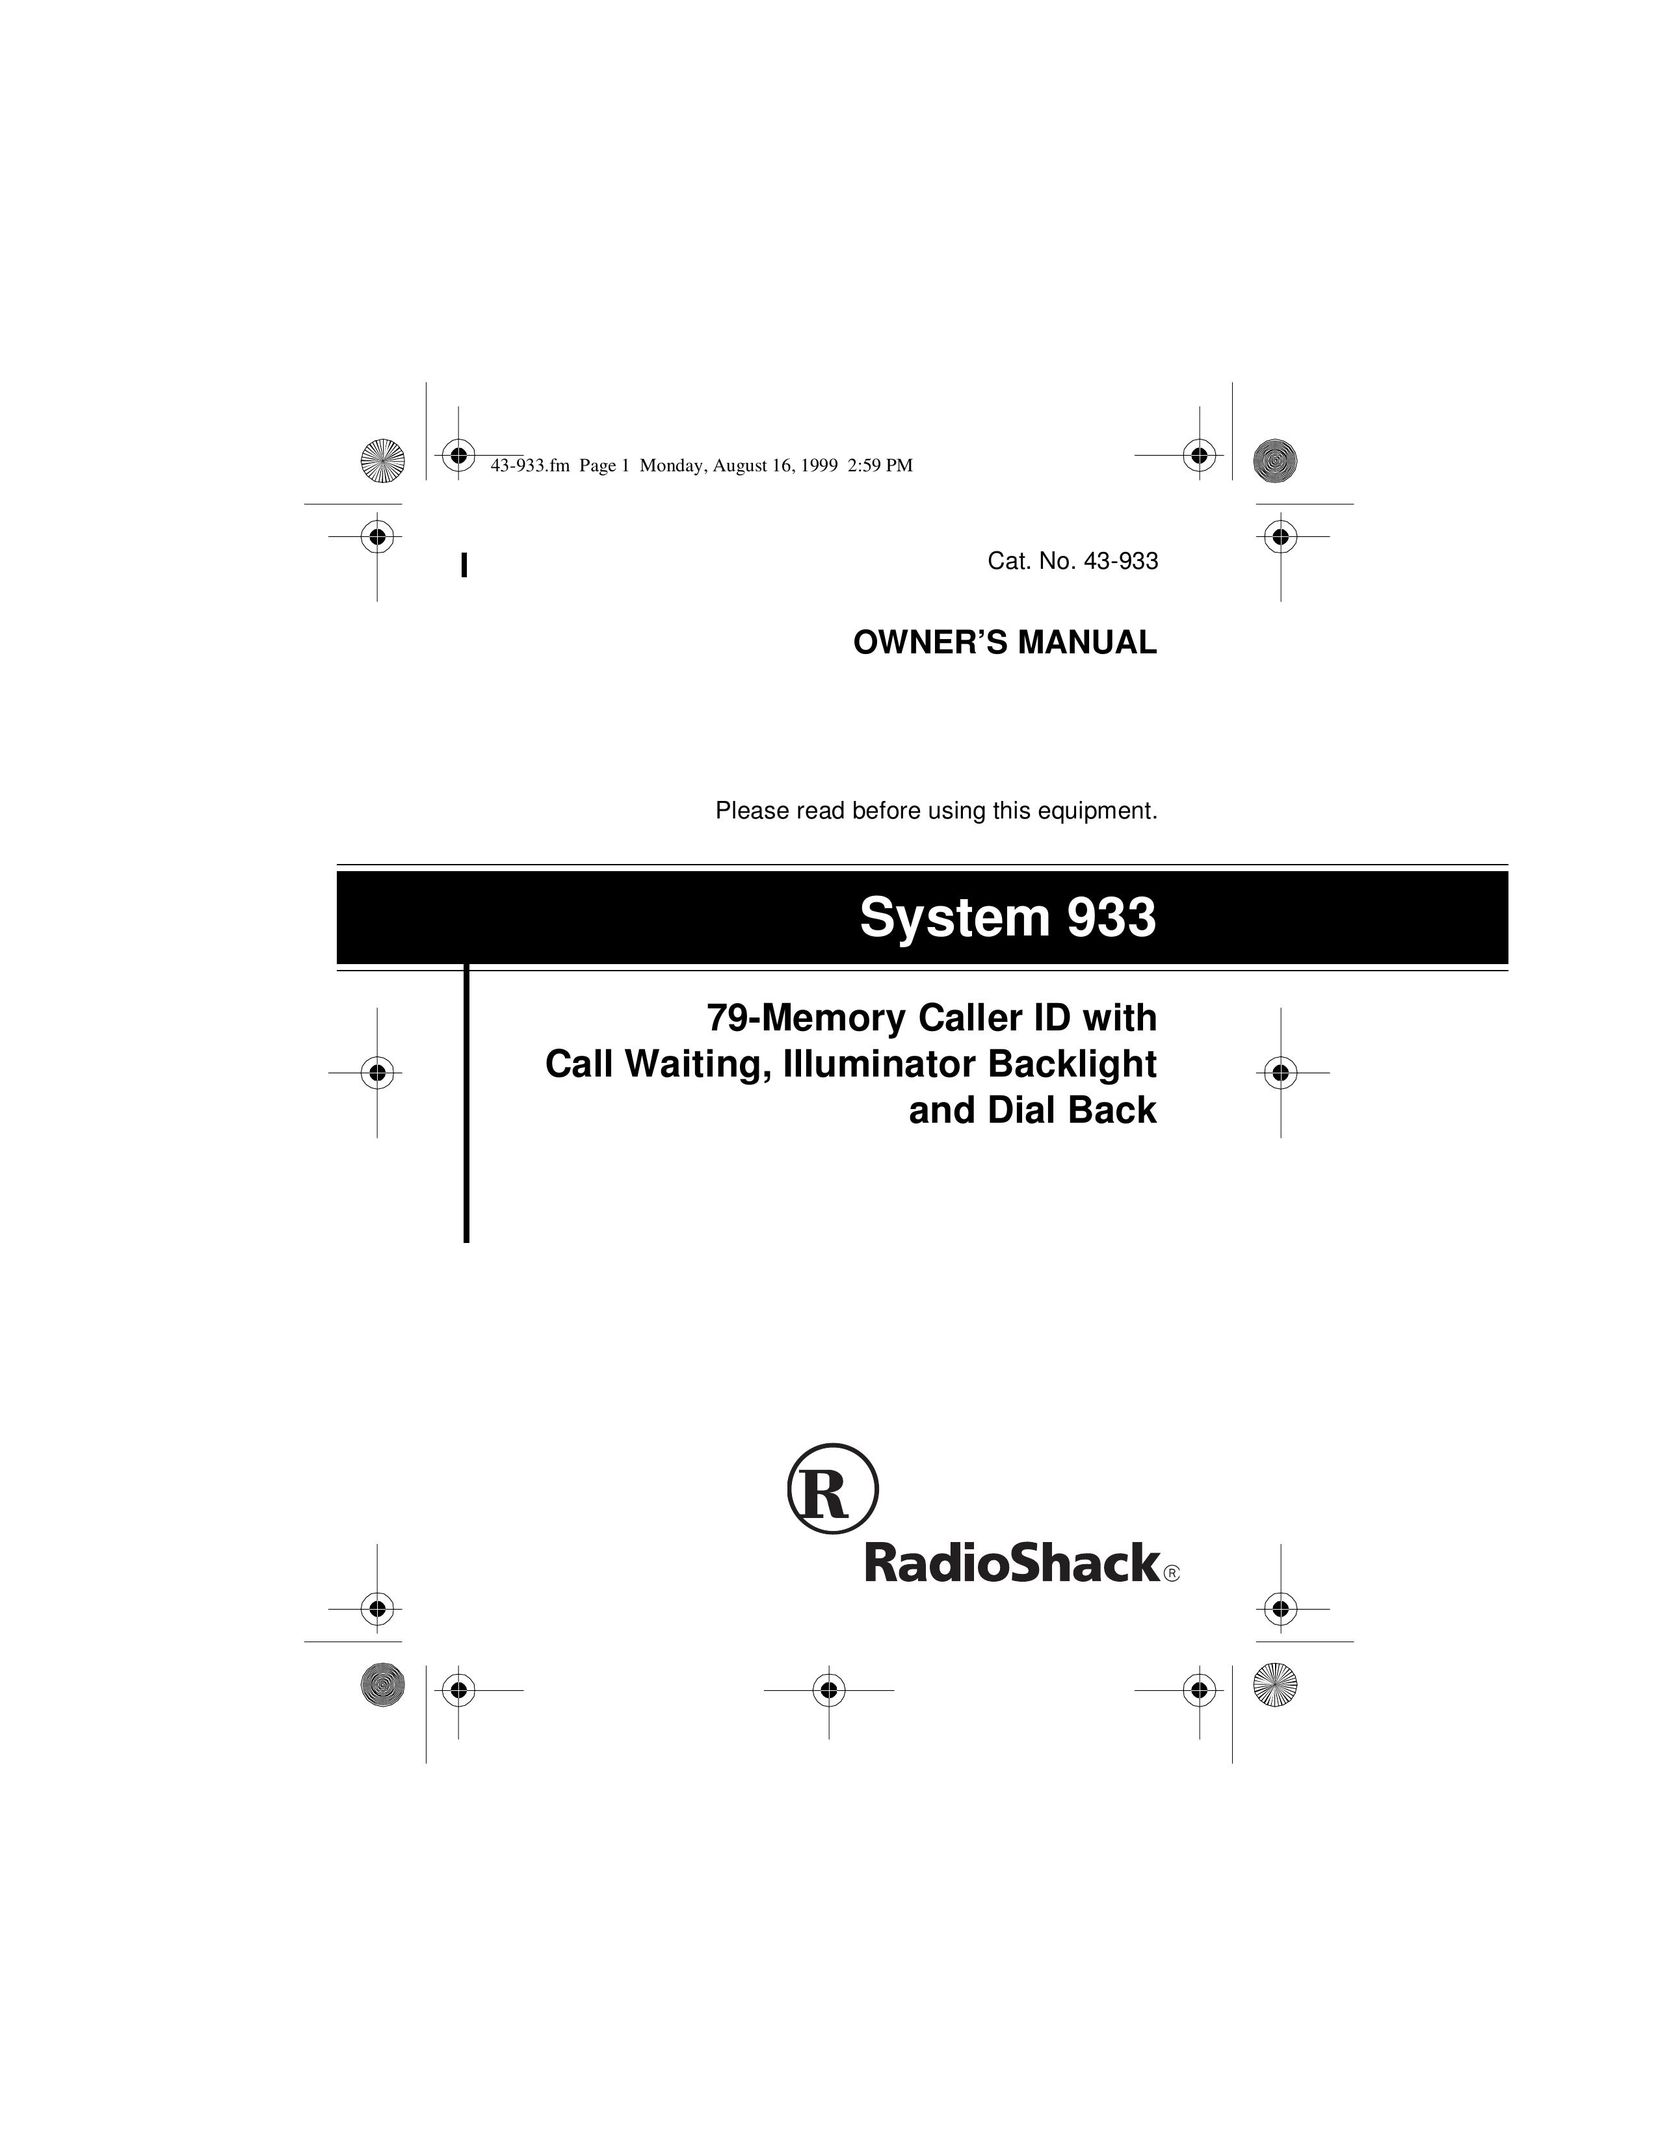 Radio Shack SYSTEM 933 Caller ID Box User Manual